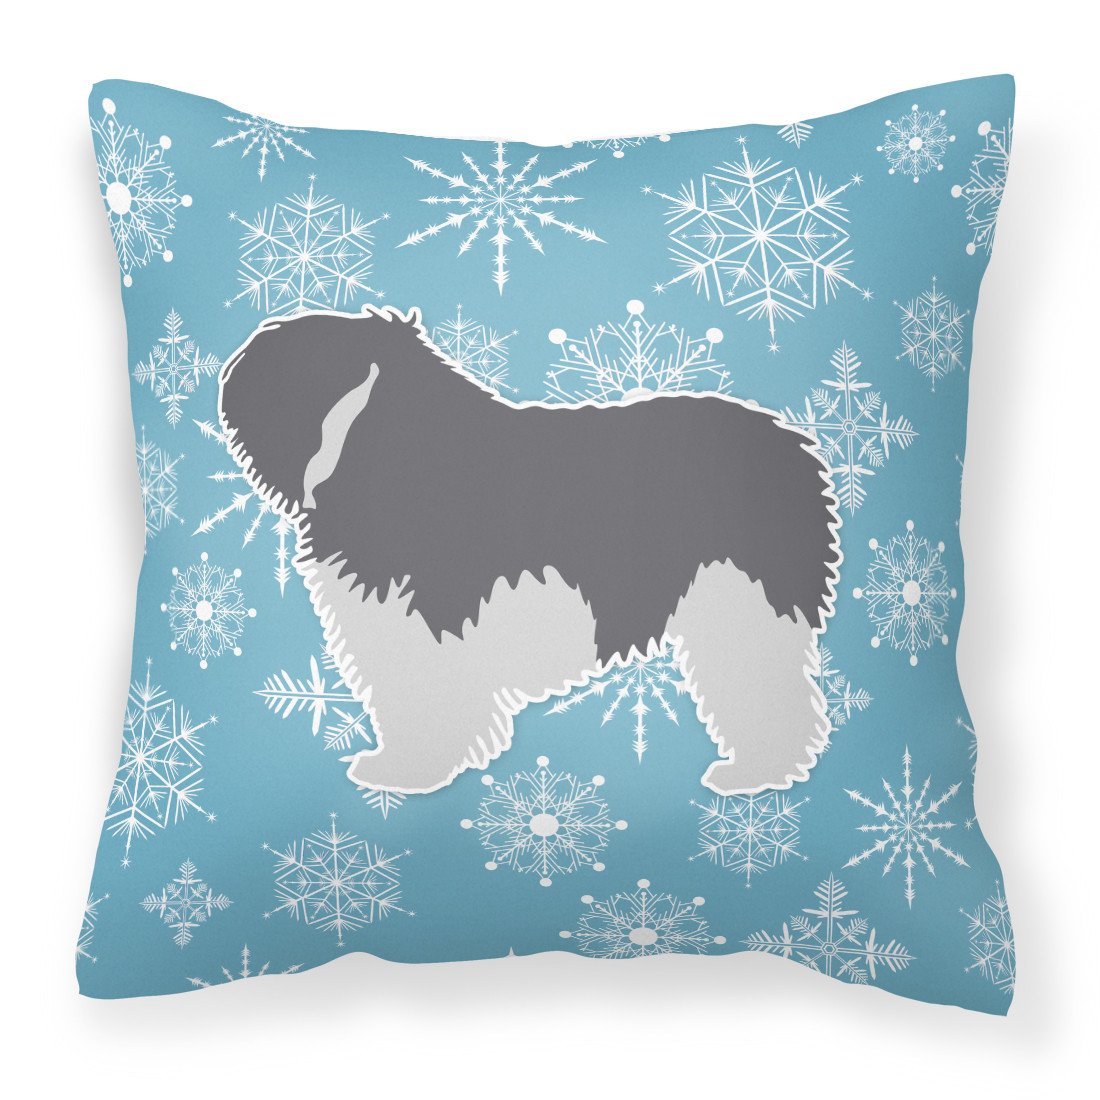 Winter Snowflake Polish Lowland Sheepdog Dog Fabric Decorative Pillow BB3532PW1818 by Caroline's Treasures